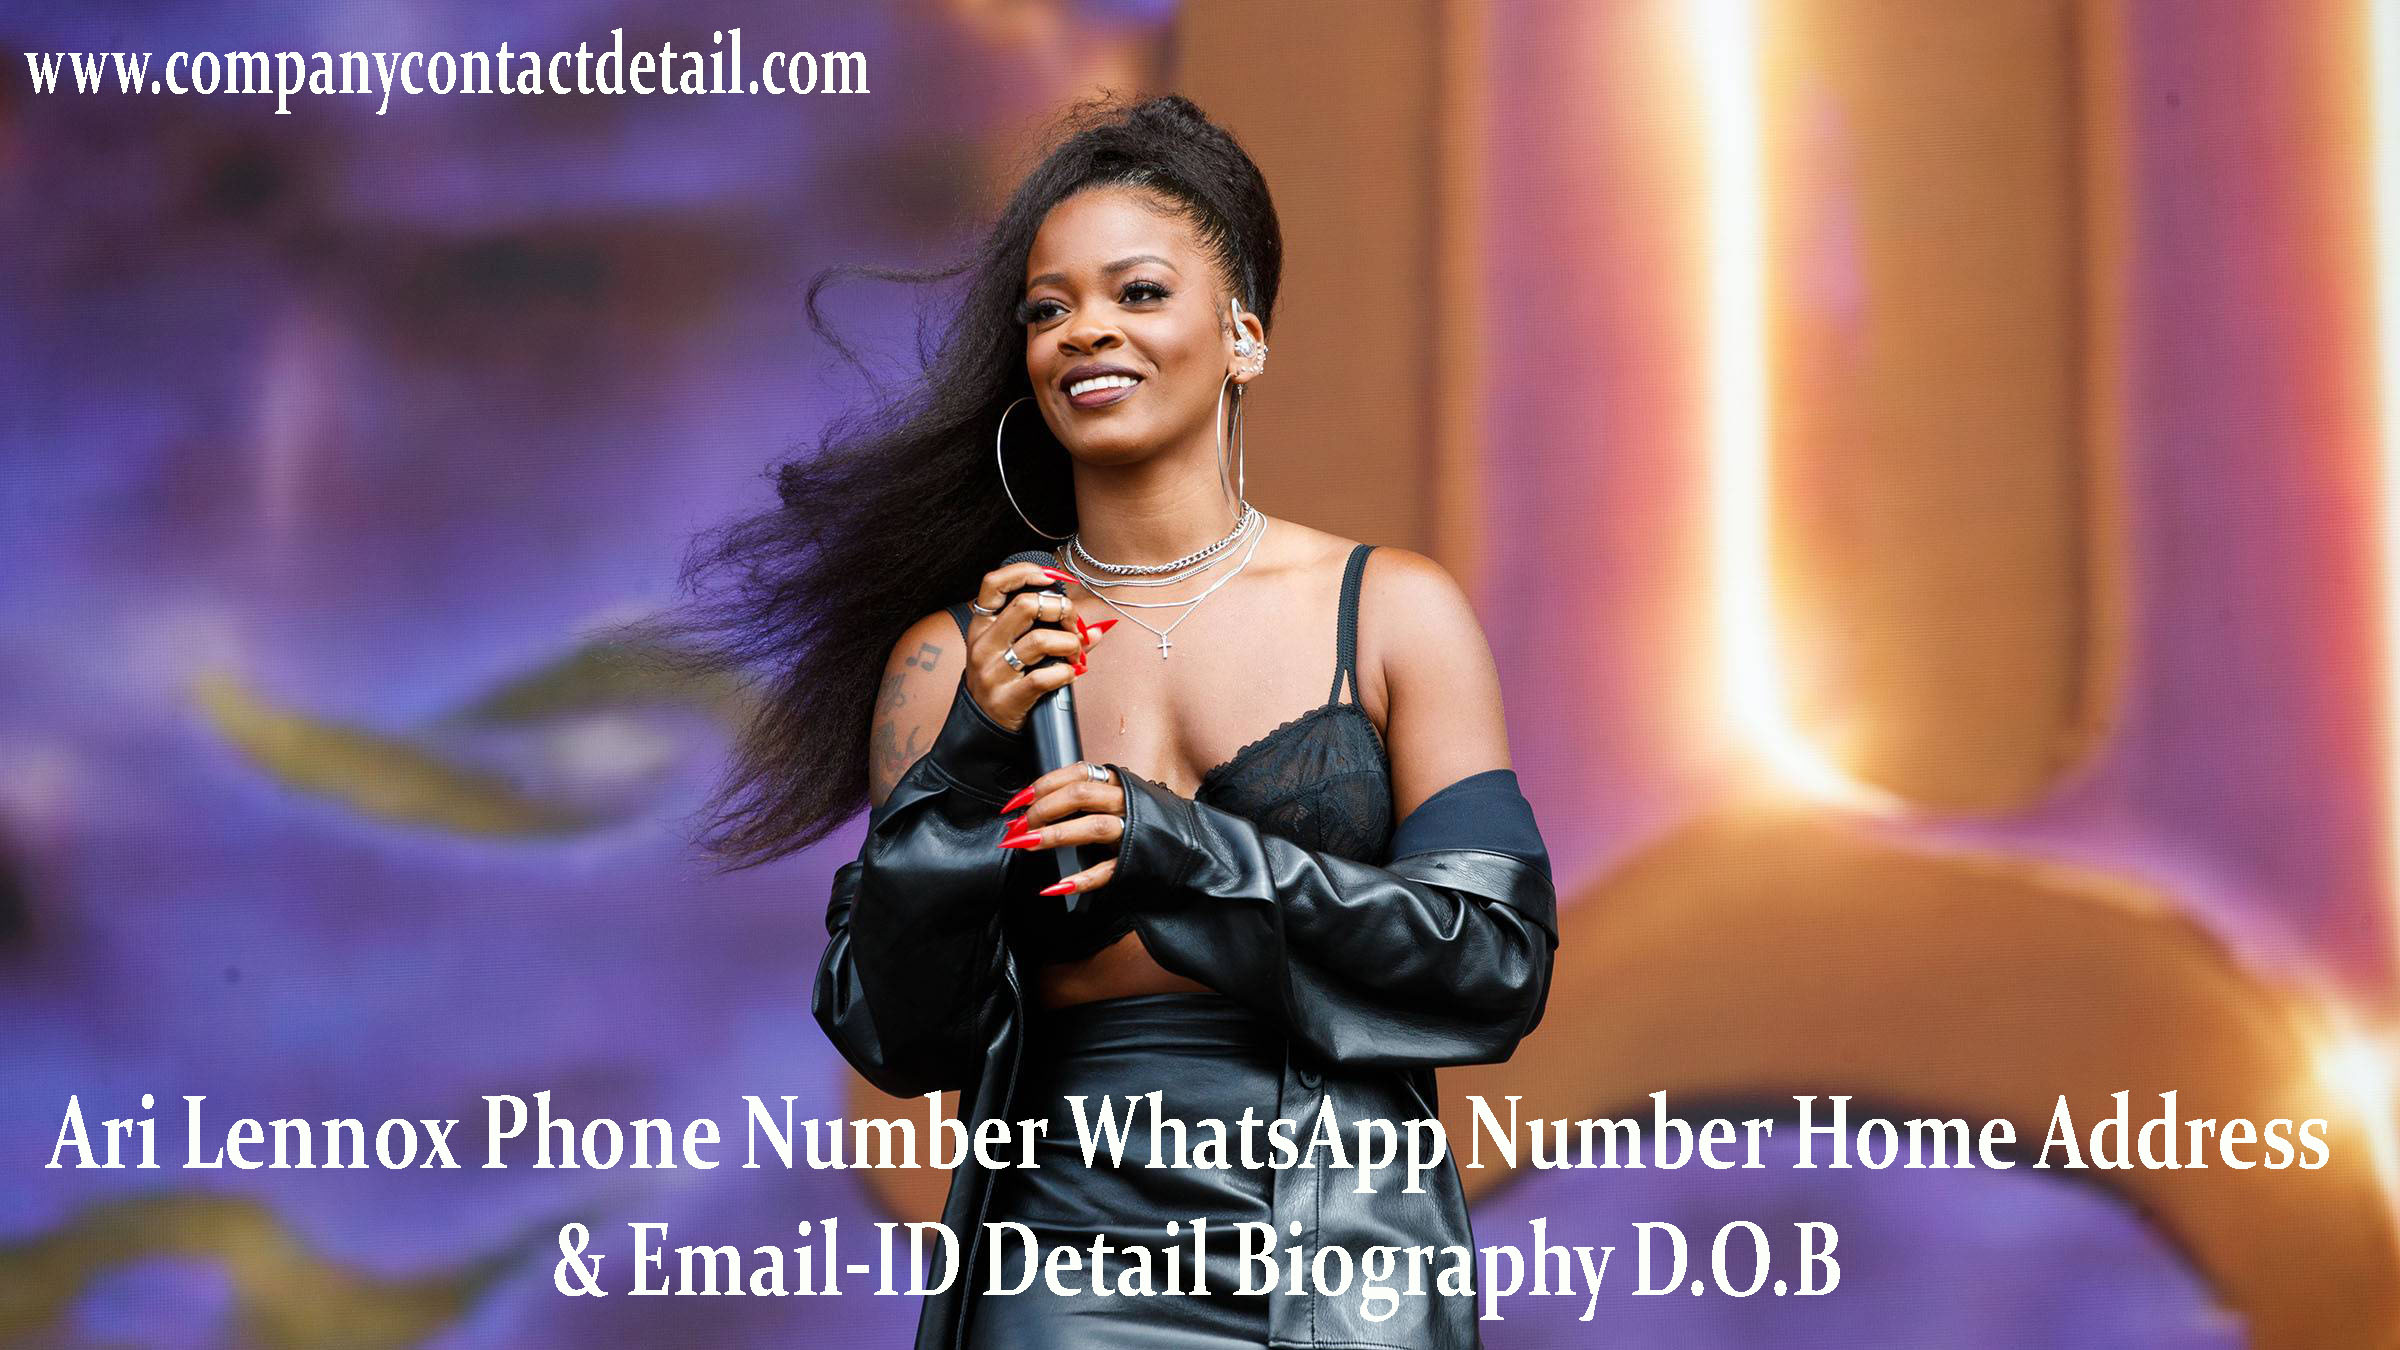 Ari Lennox Phone Number WhatsApp No Address Email Biography